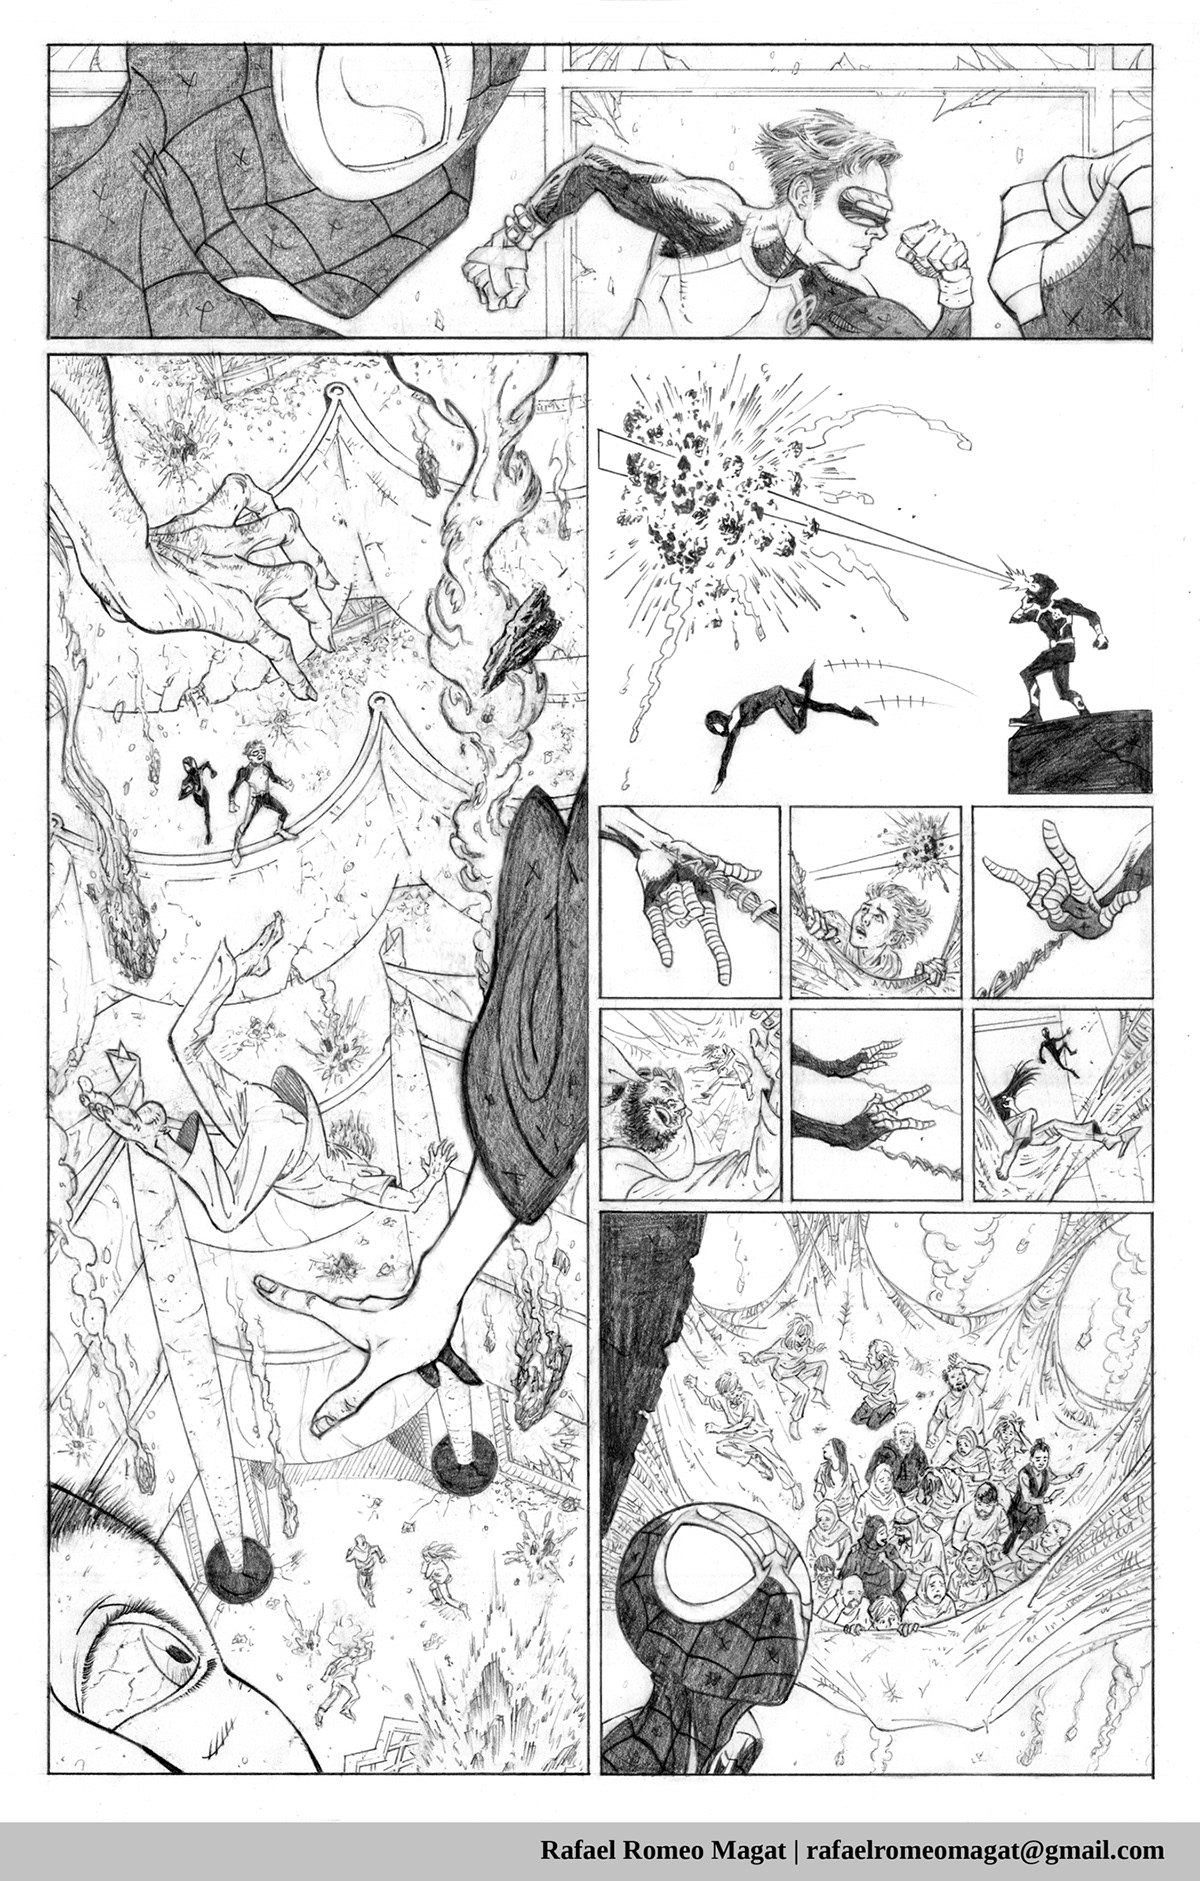 marvel marvel comics comic books Comic book samples Comic Book Art The Vision spider-man cyclops marvel's champions